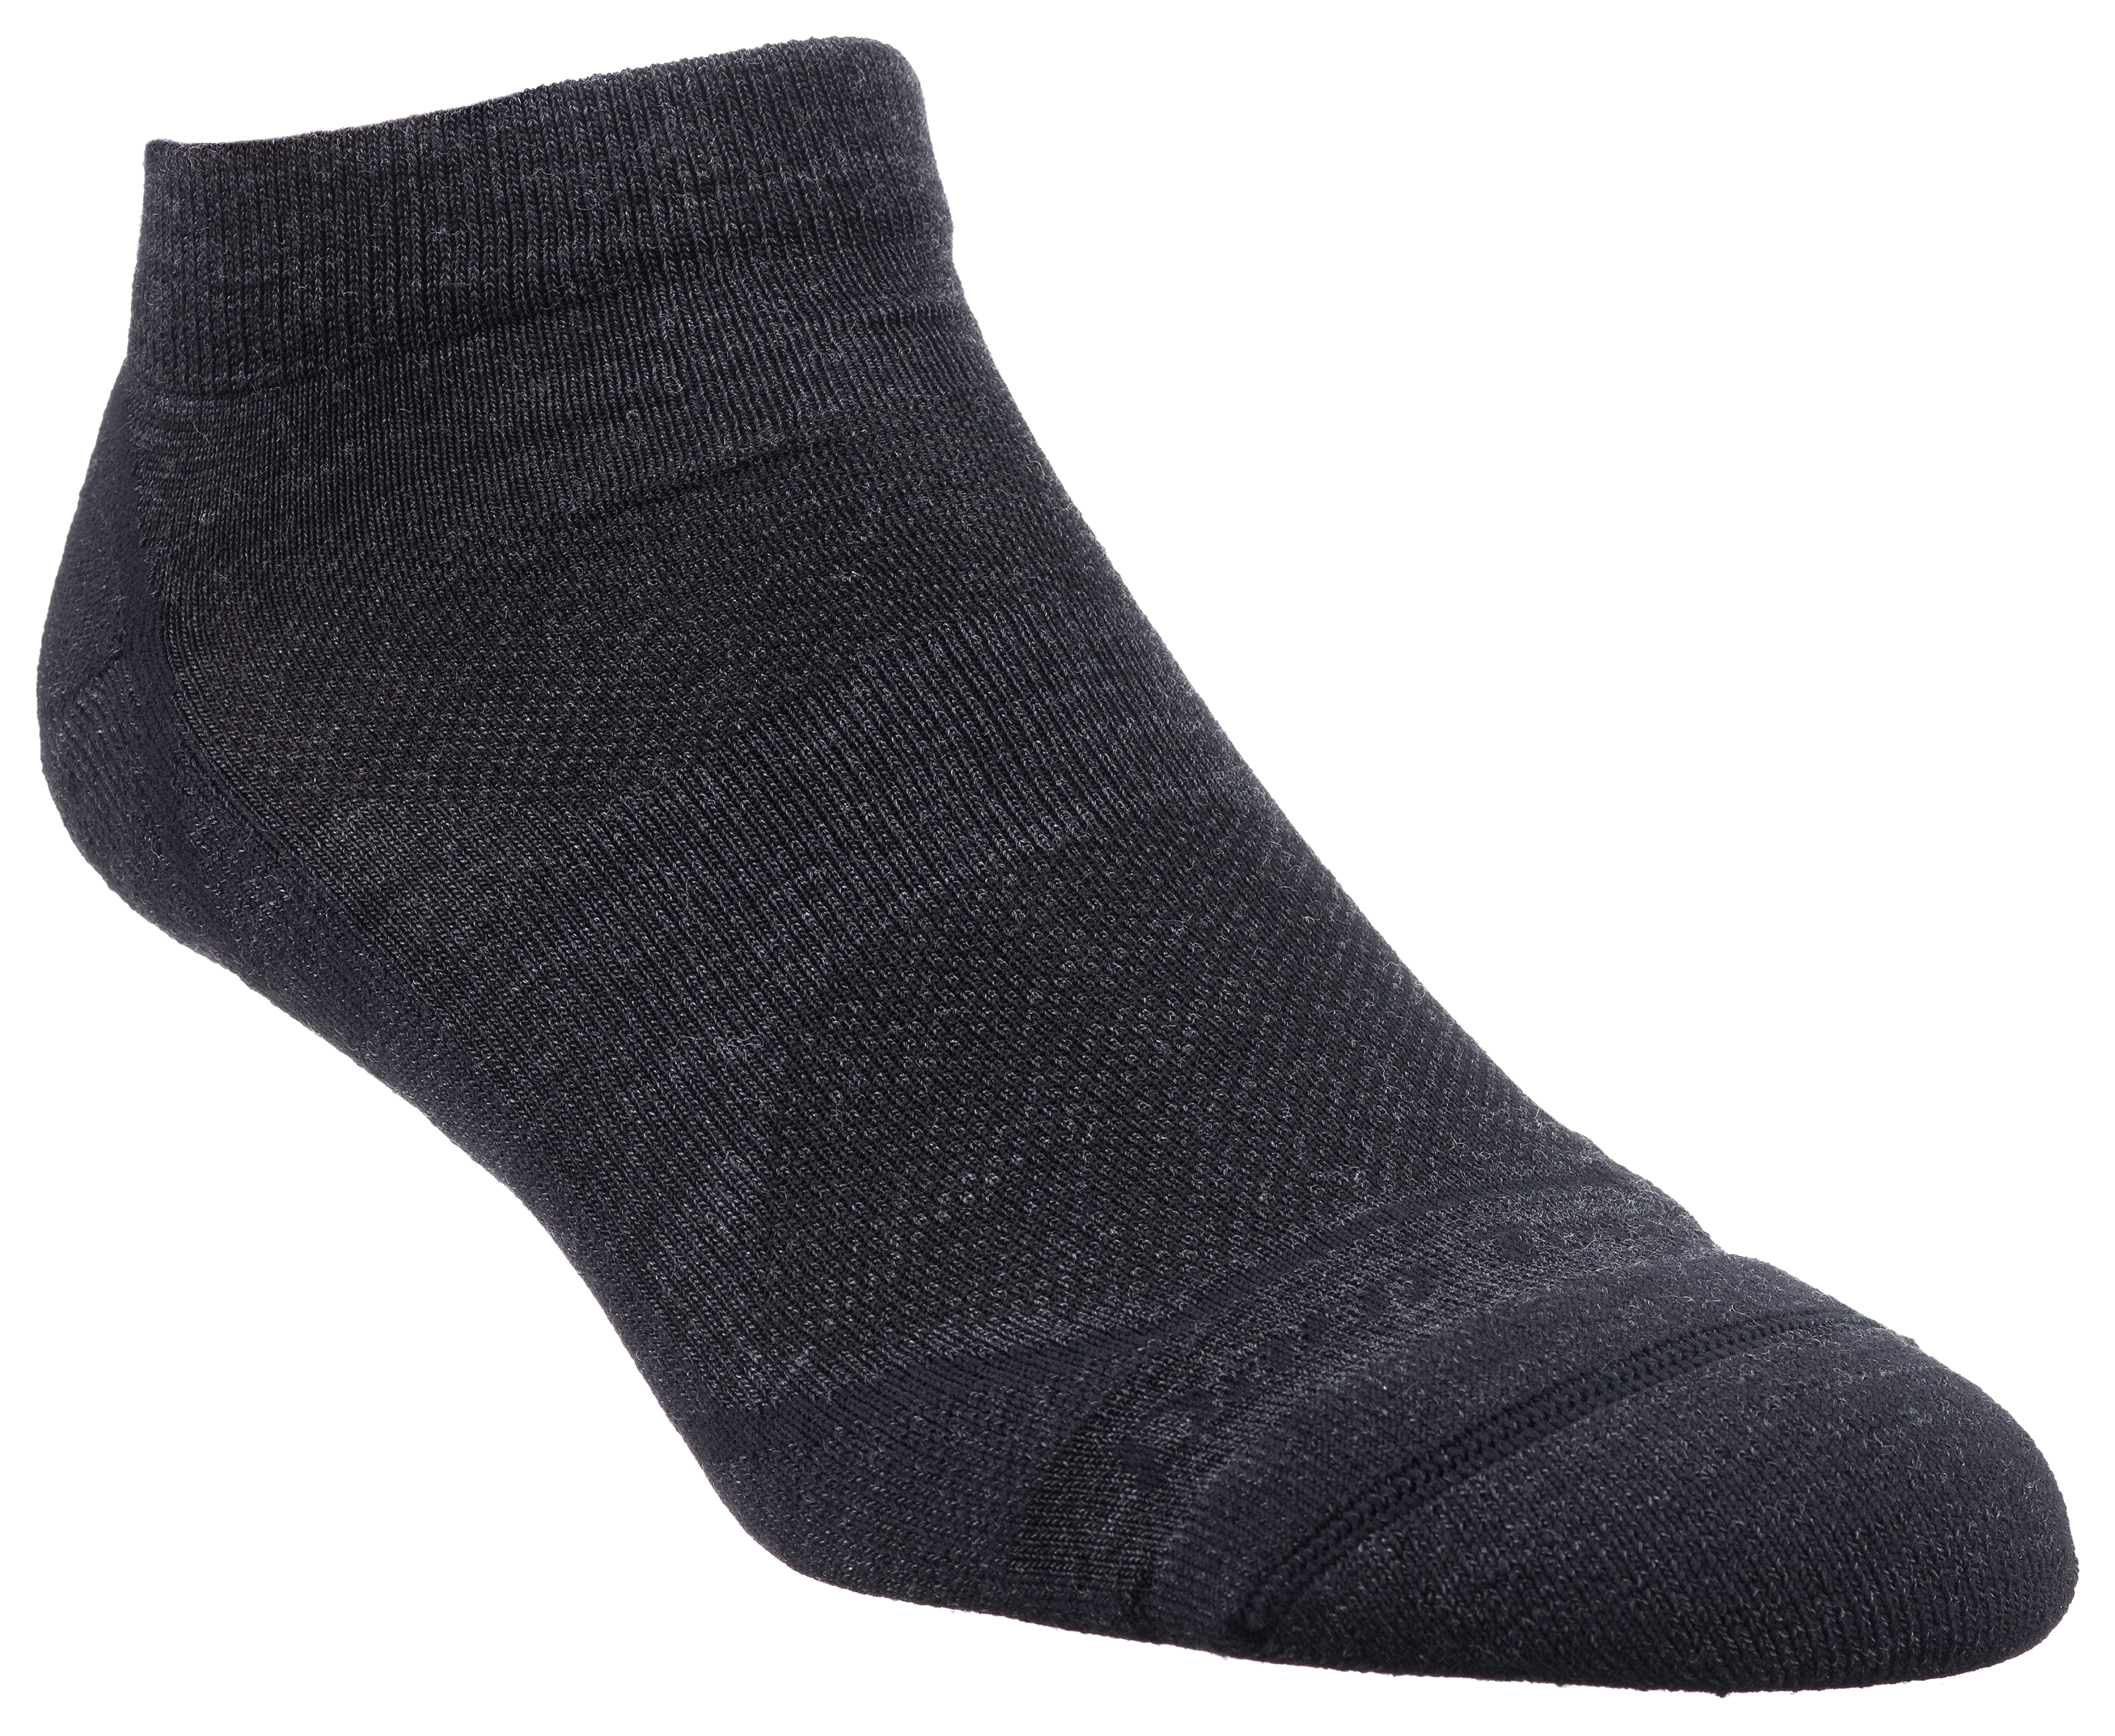 Darn Tough Light Hiker Merino Wool No-Show Socks for Men